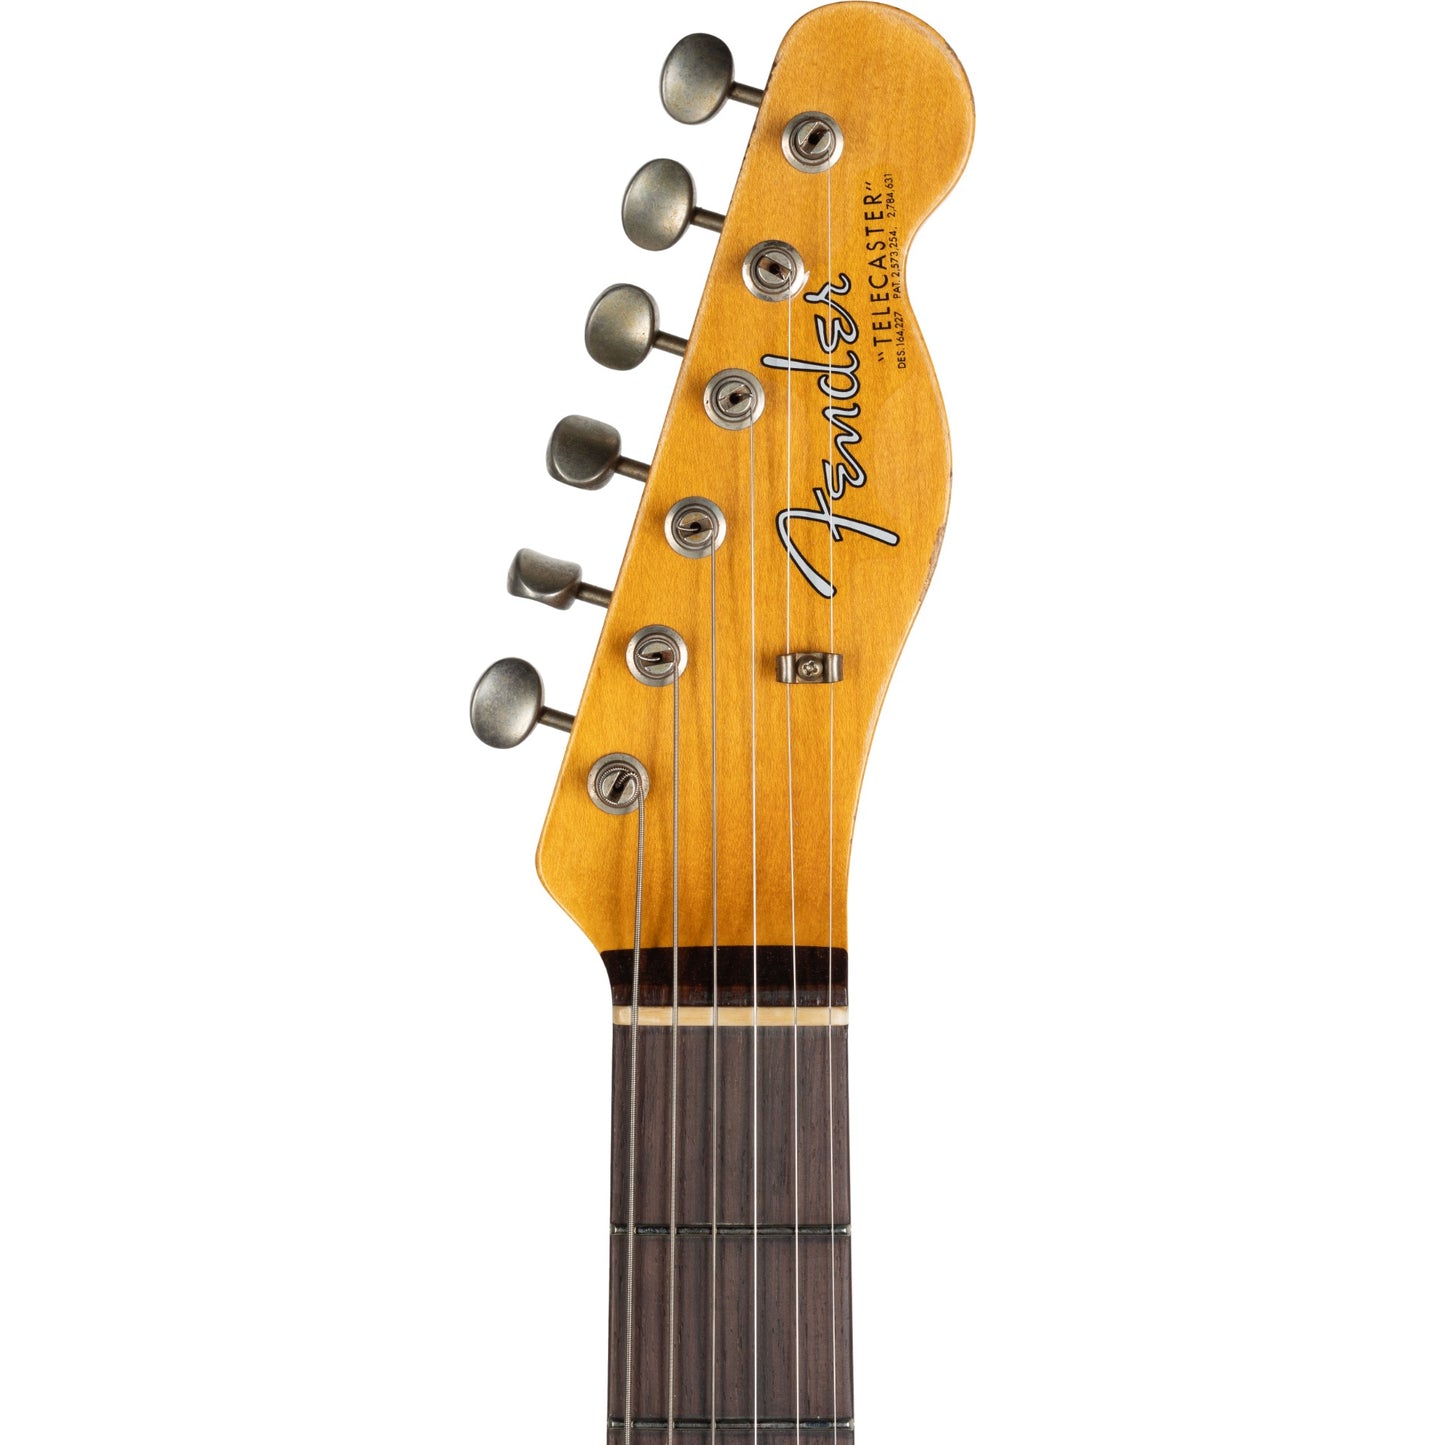 Fender Custom Shop 60’s Telecaster Relic Electric Guitar - Candy Tangerine